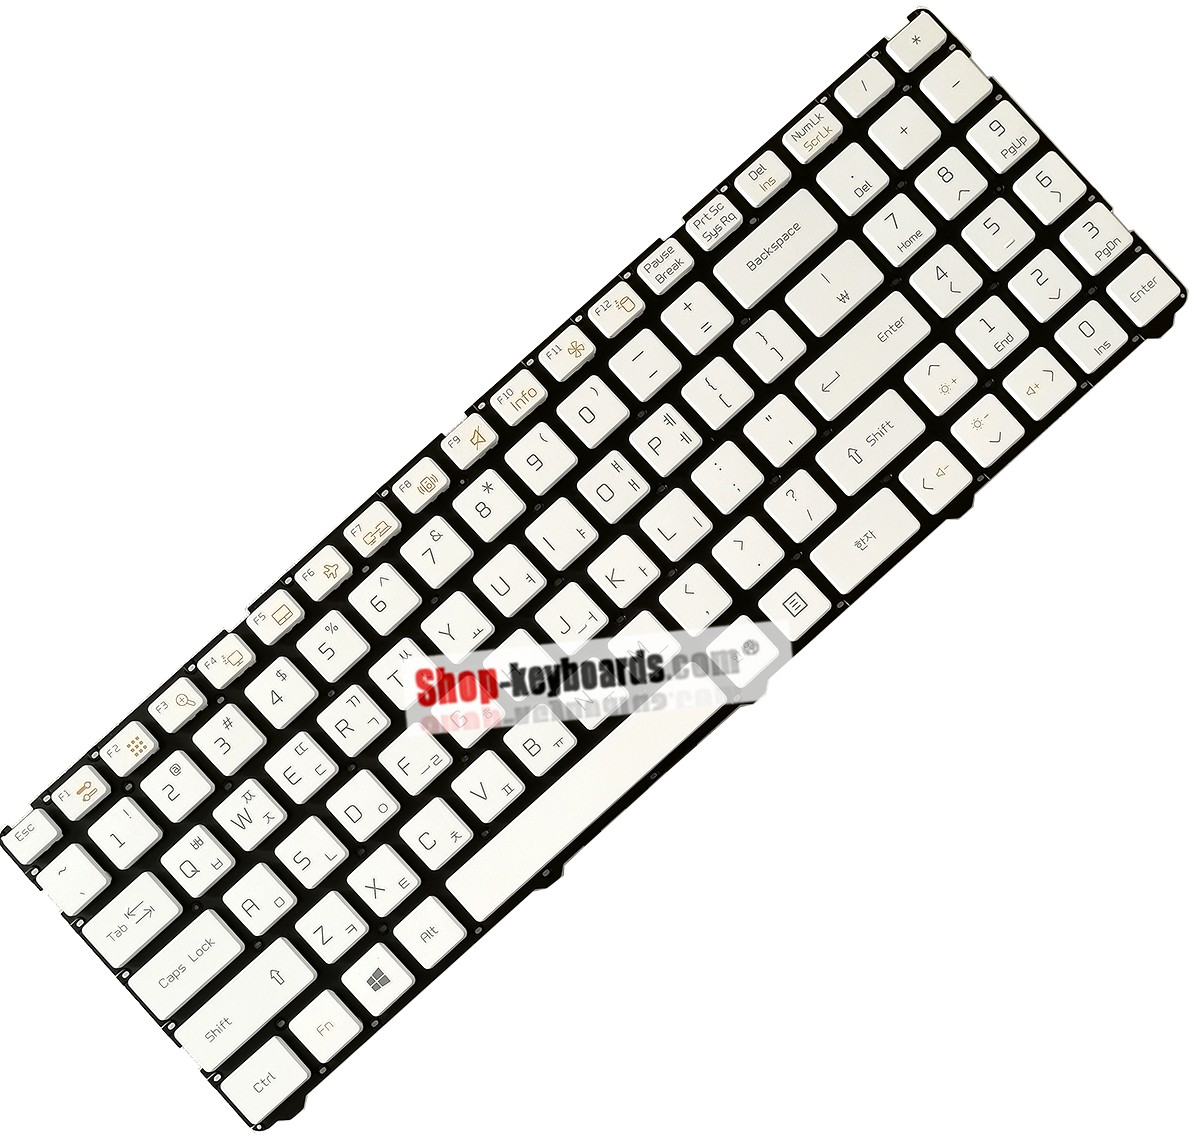 LG MP-12K73B0-9208 Keyboard replacement